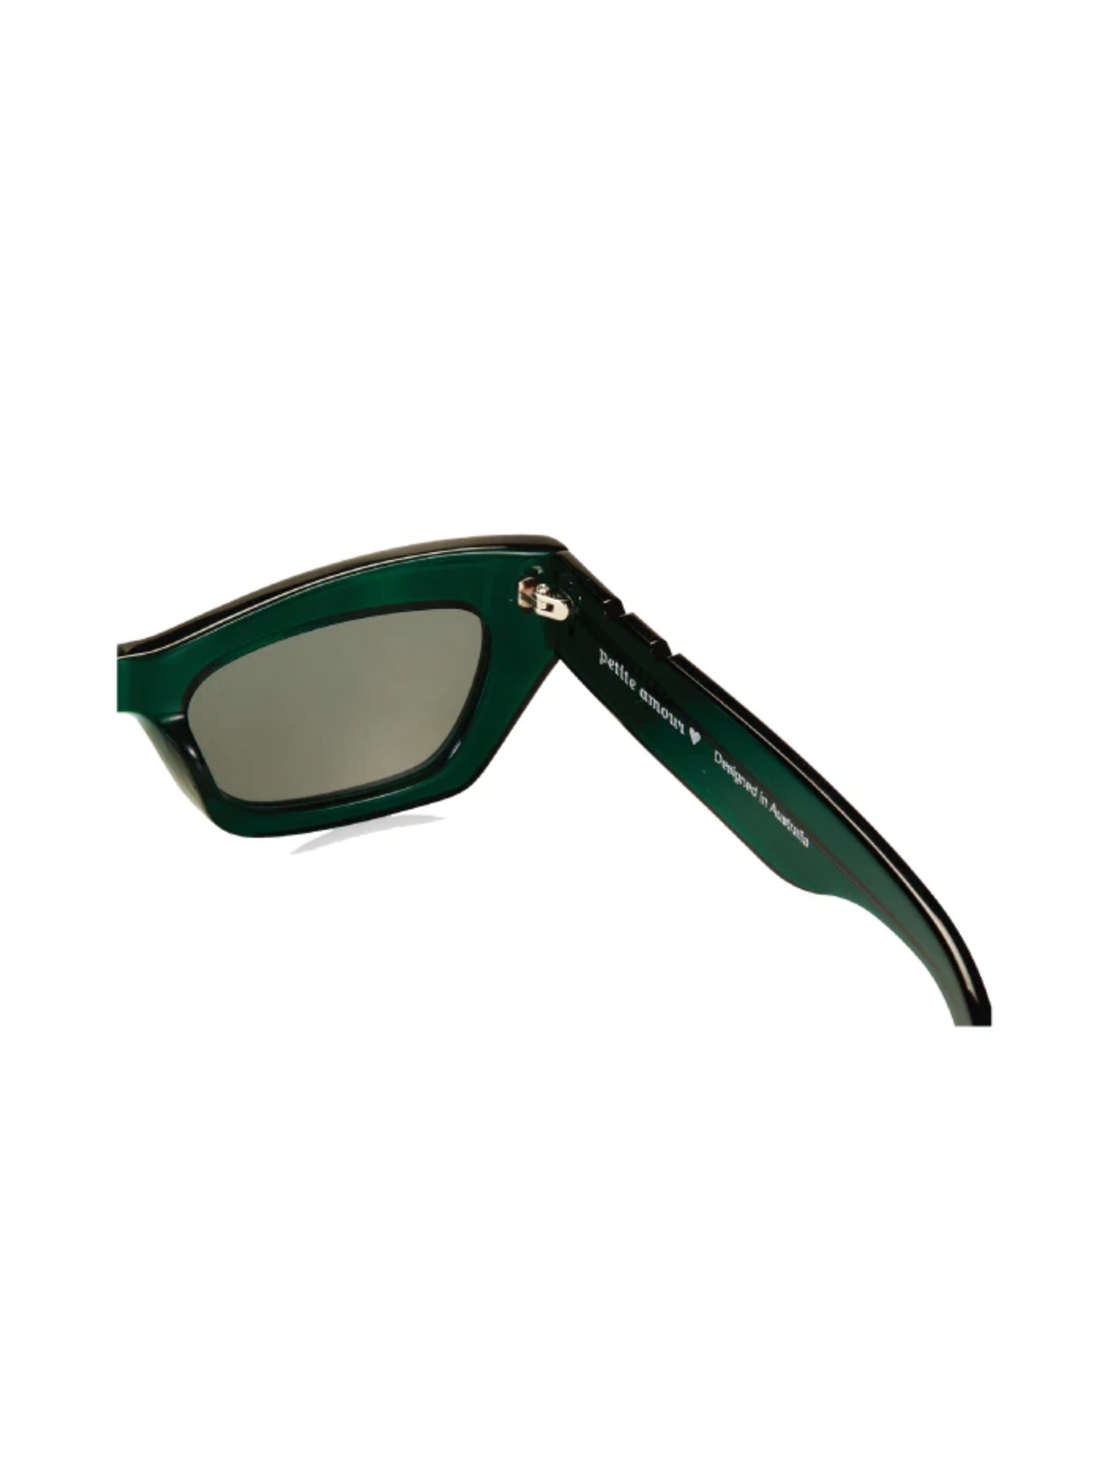 Bec & Bridge - Pared Eyewear - Emerald